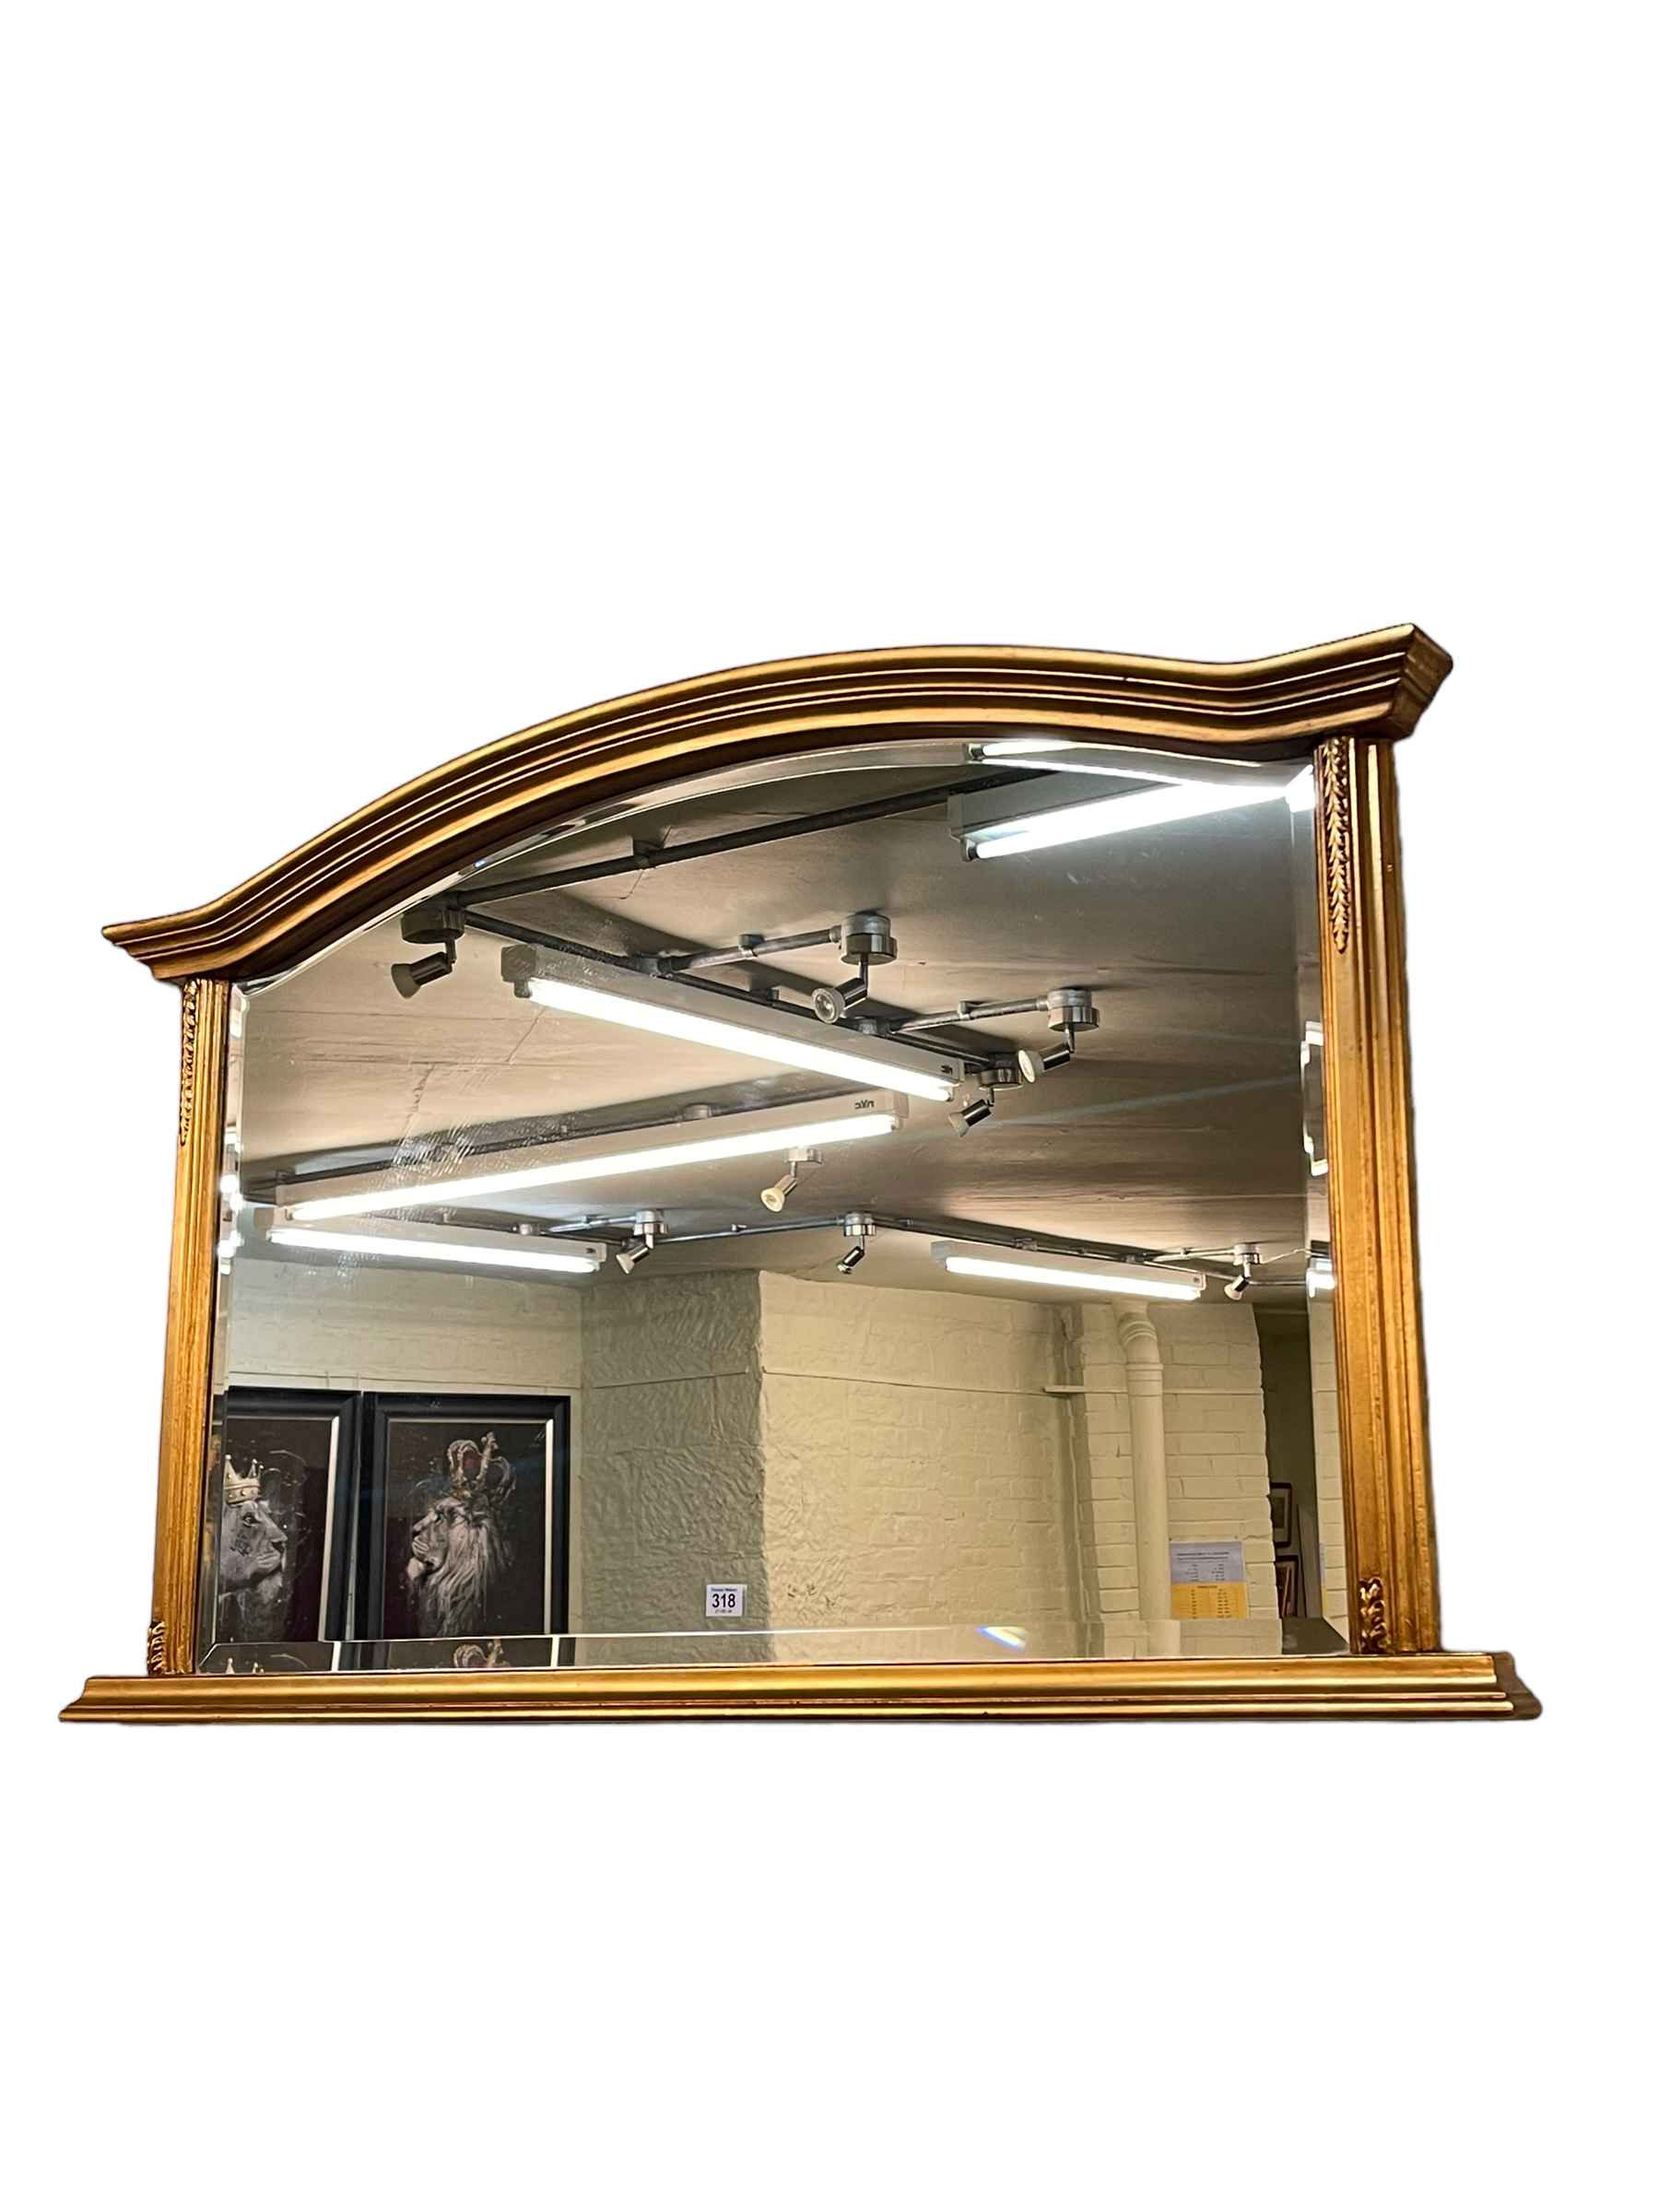 Gilt framed arched top bevelled overmantel mirror, 77cm by 122cm.